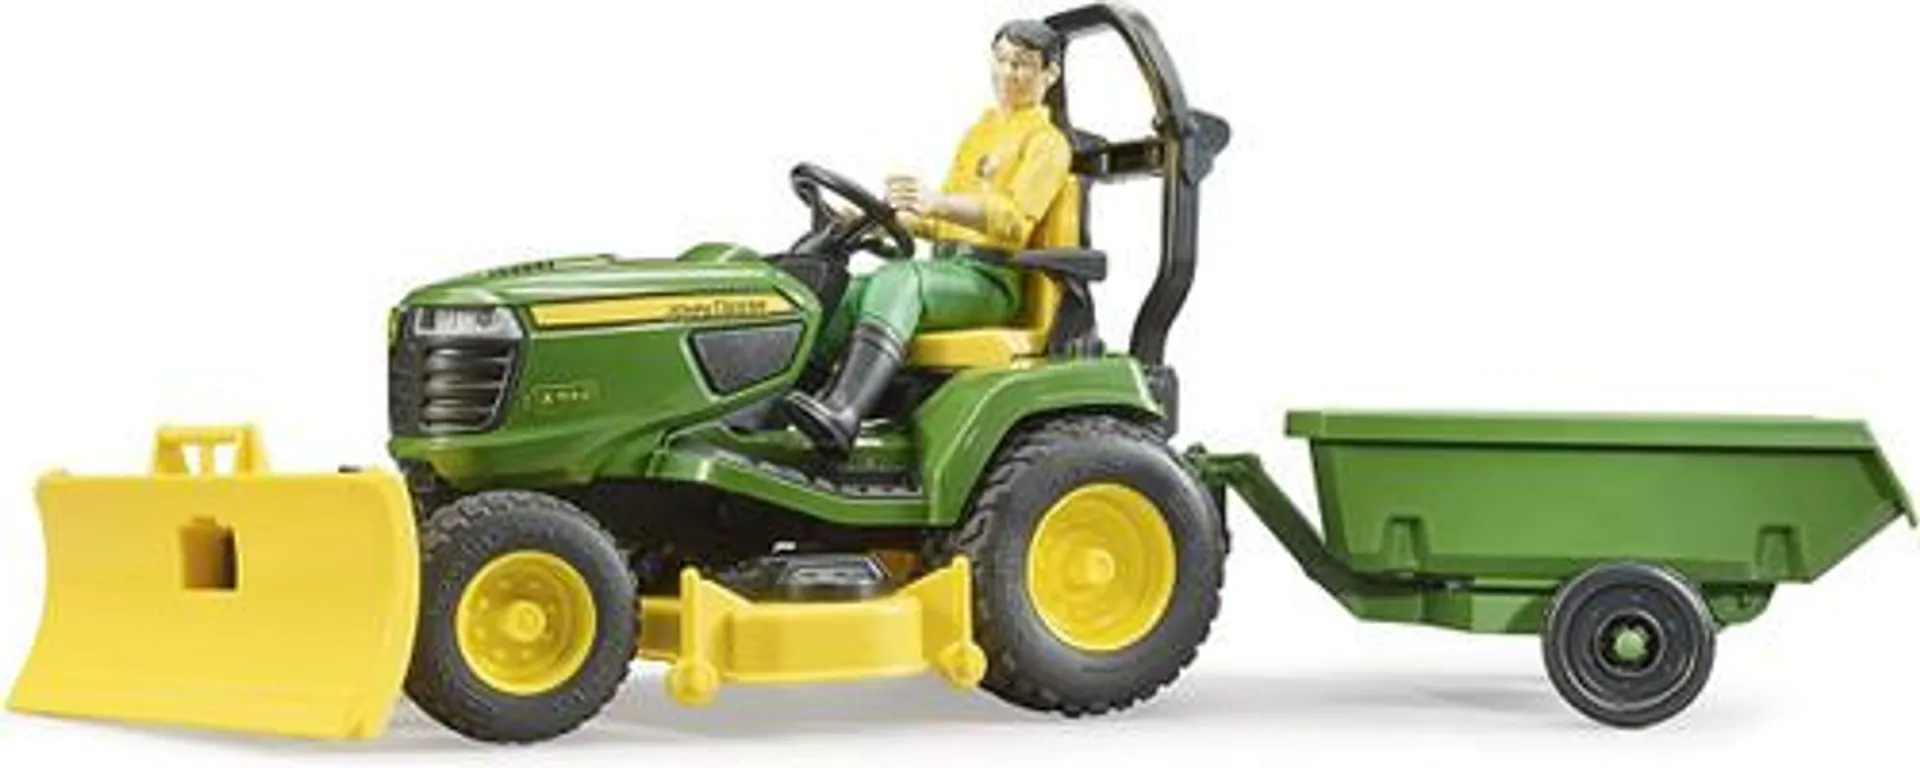 Bruder Bworld John Deere Lawn Tractor w Trailer and Gardener